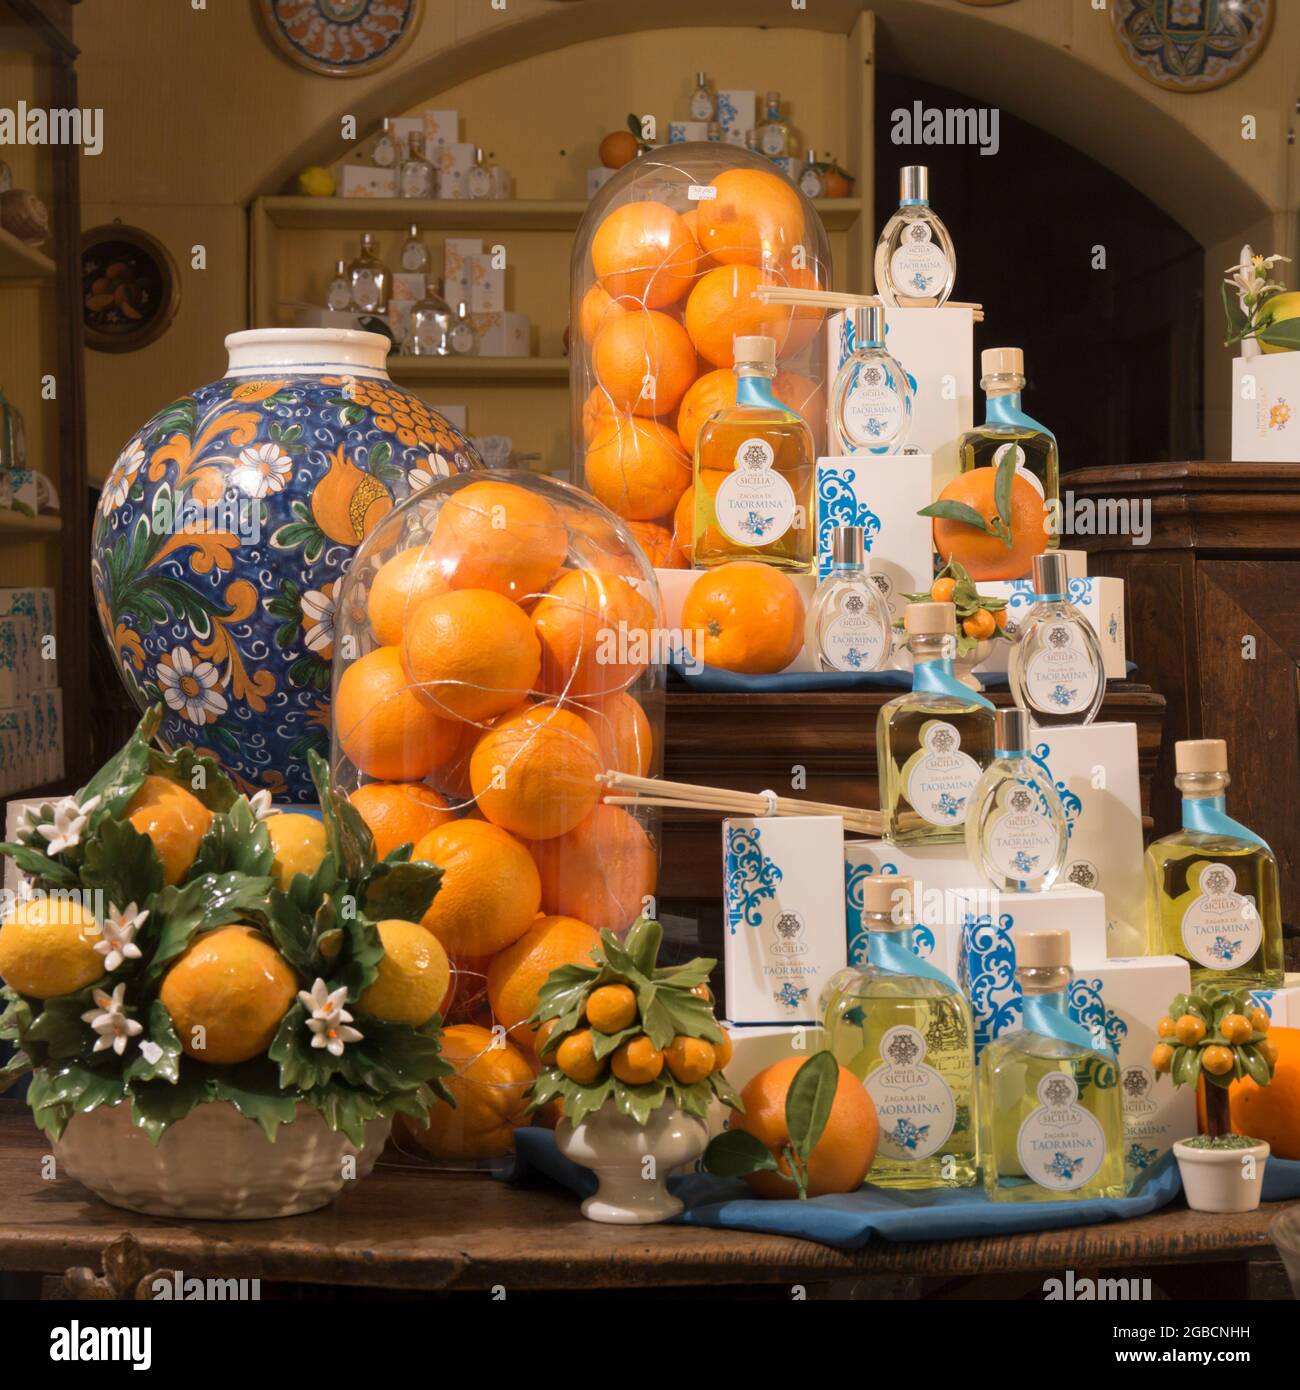 Taormina, Messina, Sicily, Italy. Traditional perfume shop window display featuring jars of oranges, traditional ceramics and island fragrances. Stock Photo